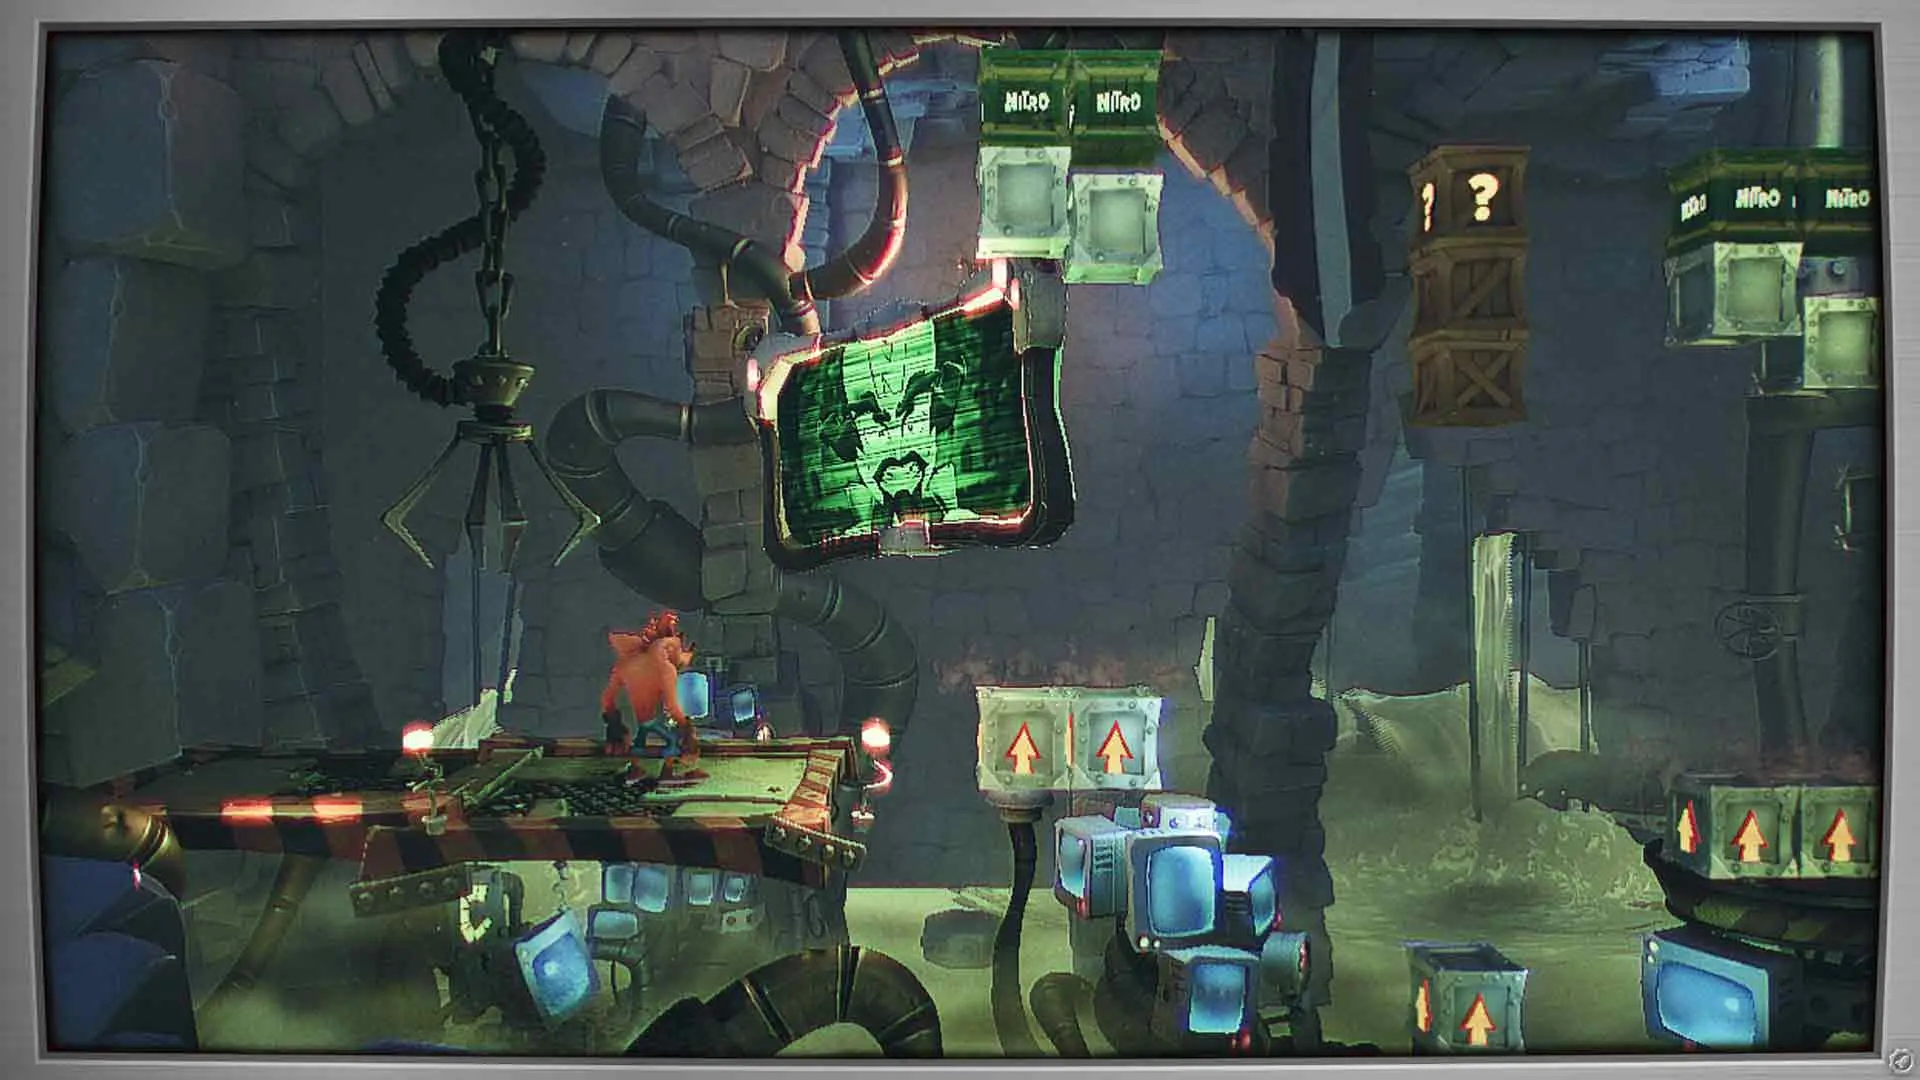 Crash Bandicoot 4: It's About Time flashback level screenshot